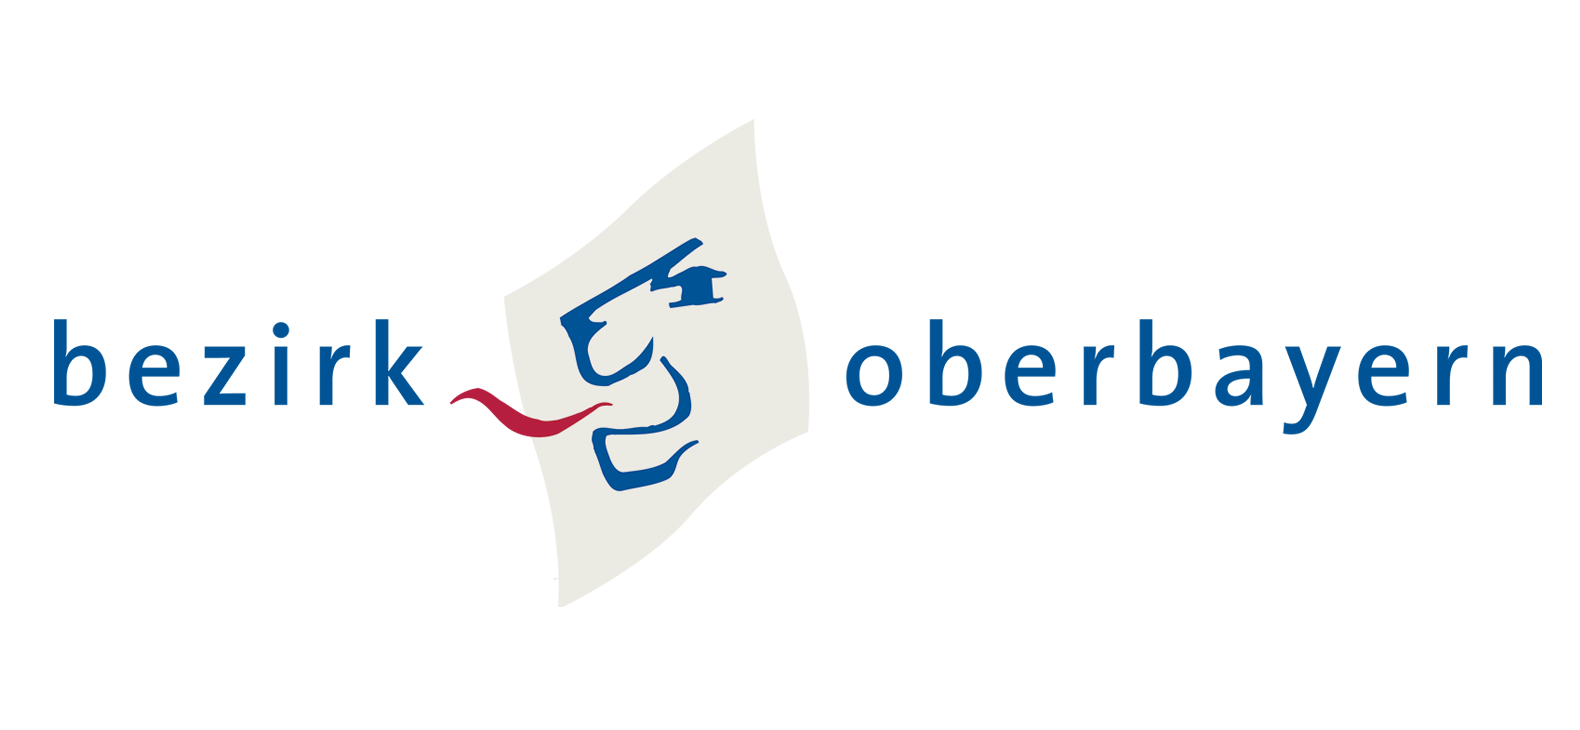 Logo Bezirk Oberbayern 2378 1033 1 r